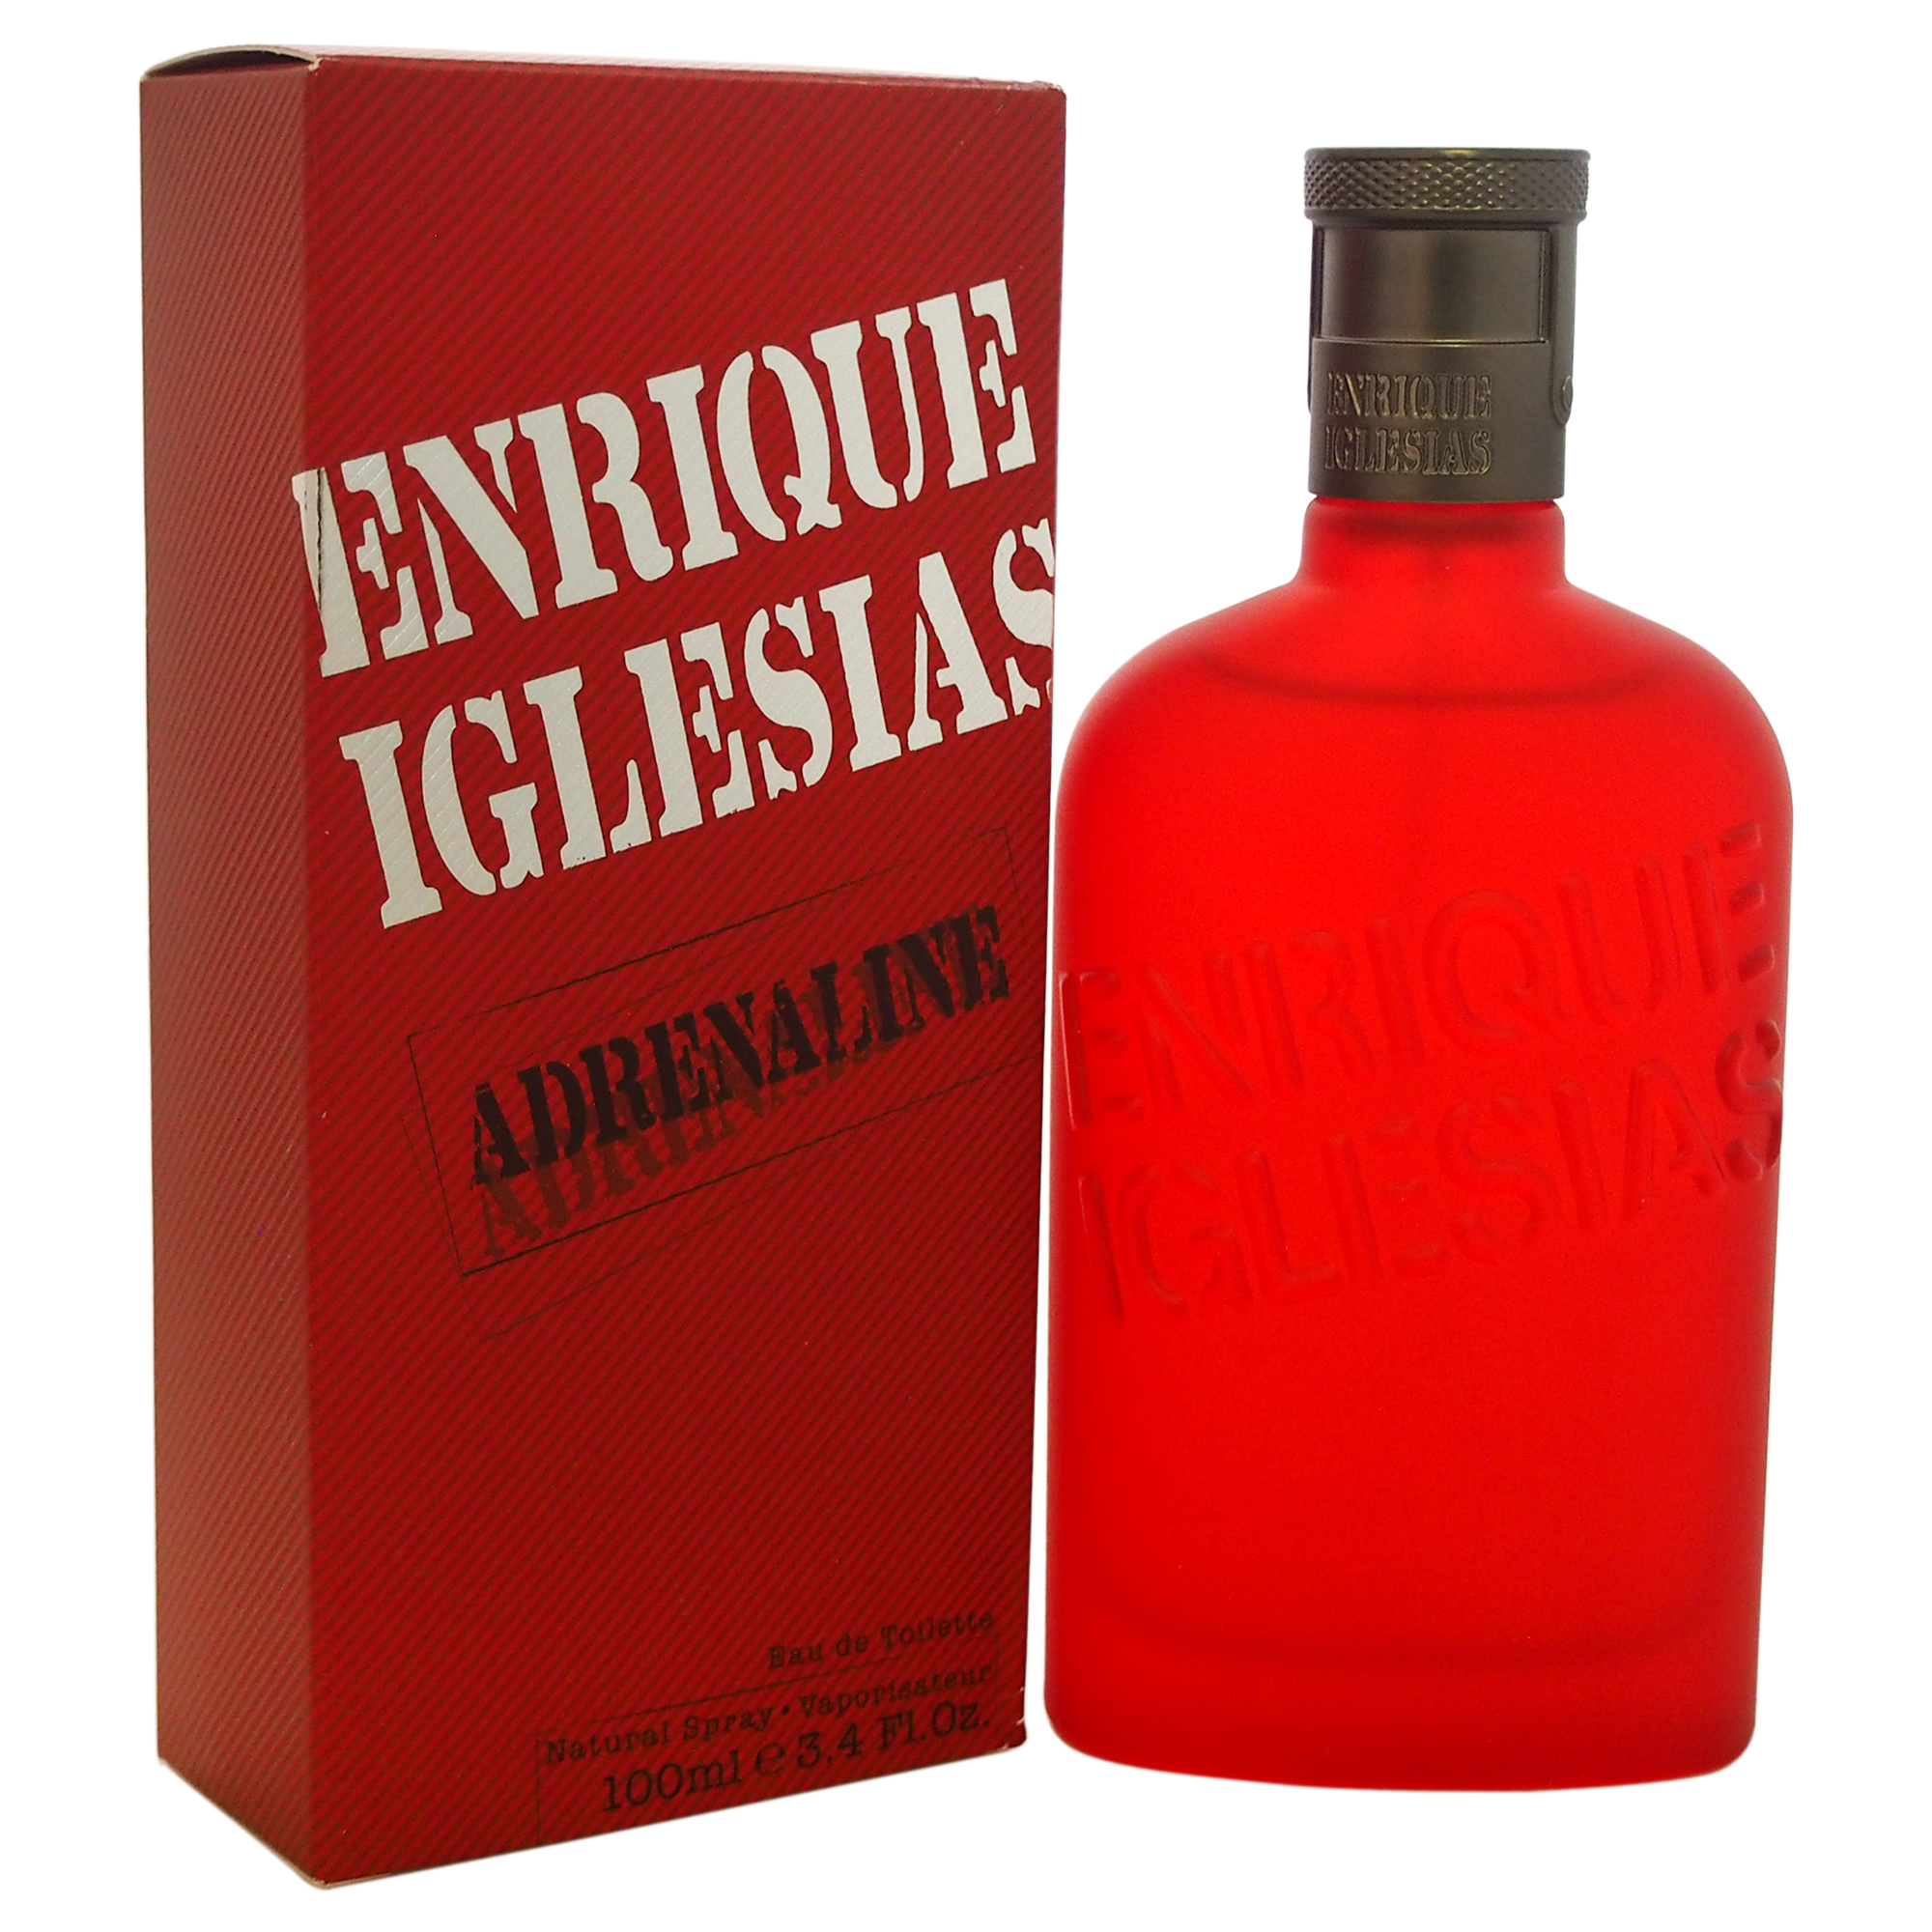 ENRIQUE IGLESIAS ADRENALINE by Enrique Iglesias for Men - 3.4 oz EDT Spray